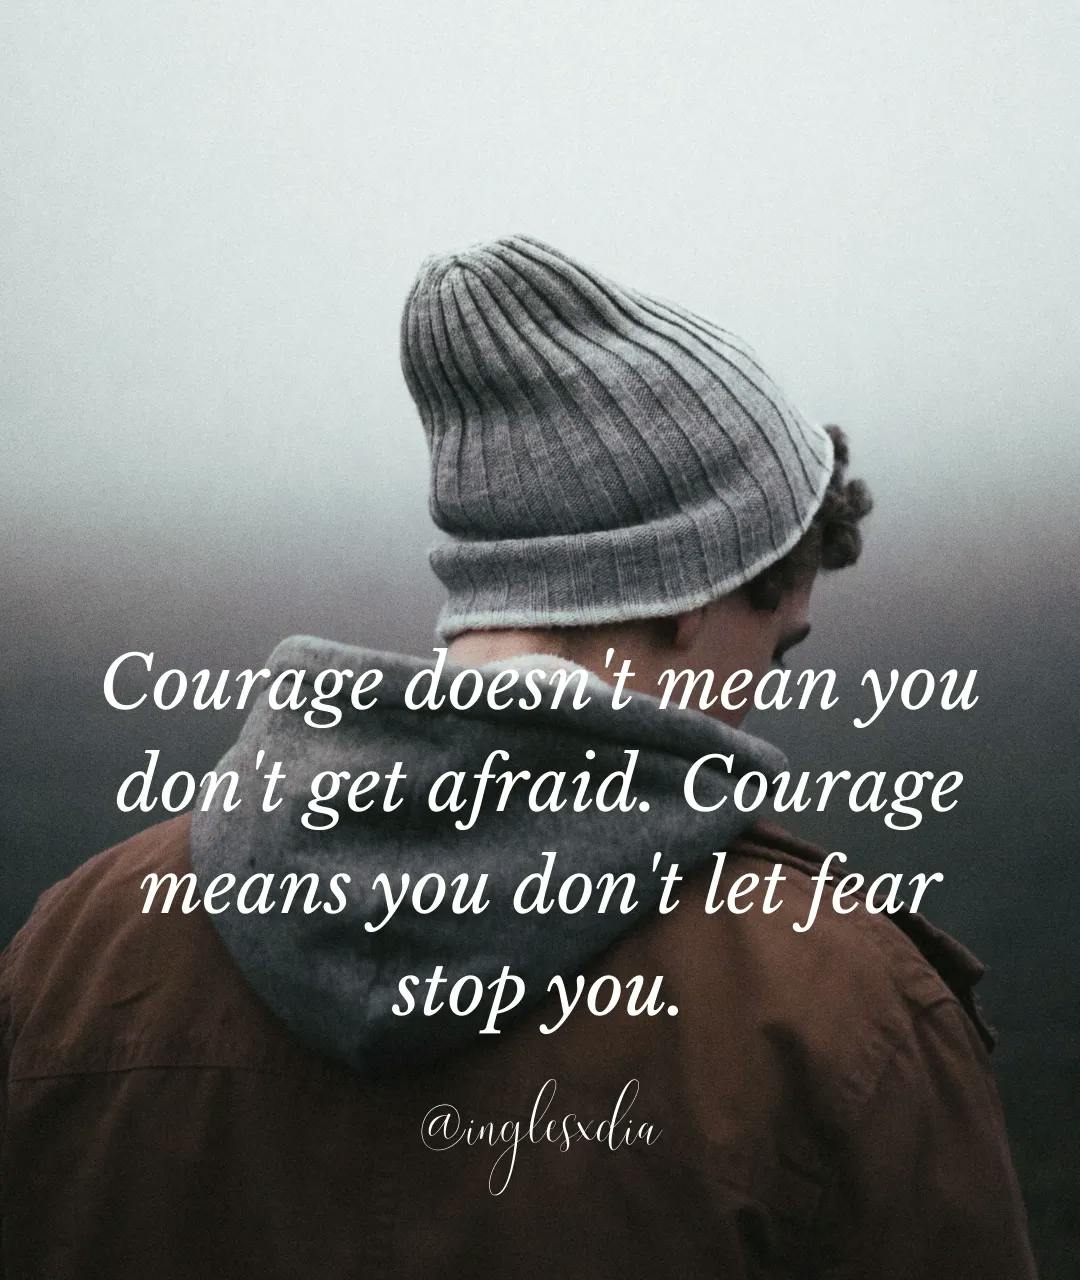 Frases motivadoras en inglés: Courage doesn't mean you don't get afraid. Courage means you don't let fear stop you.